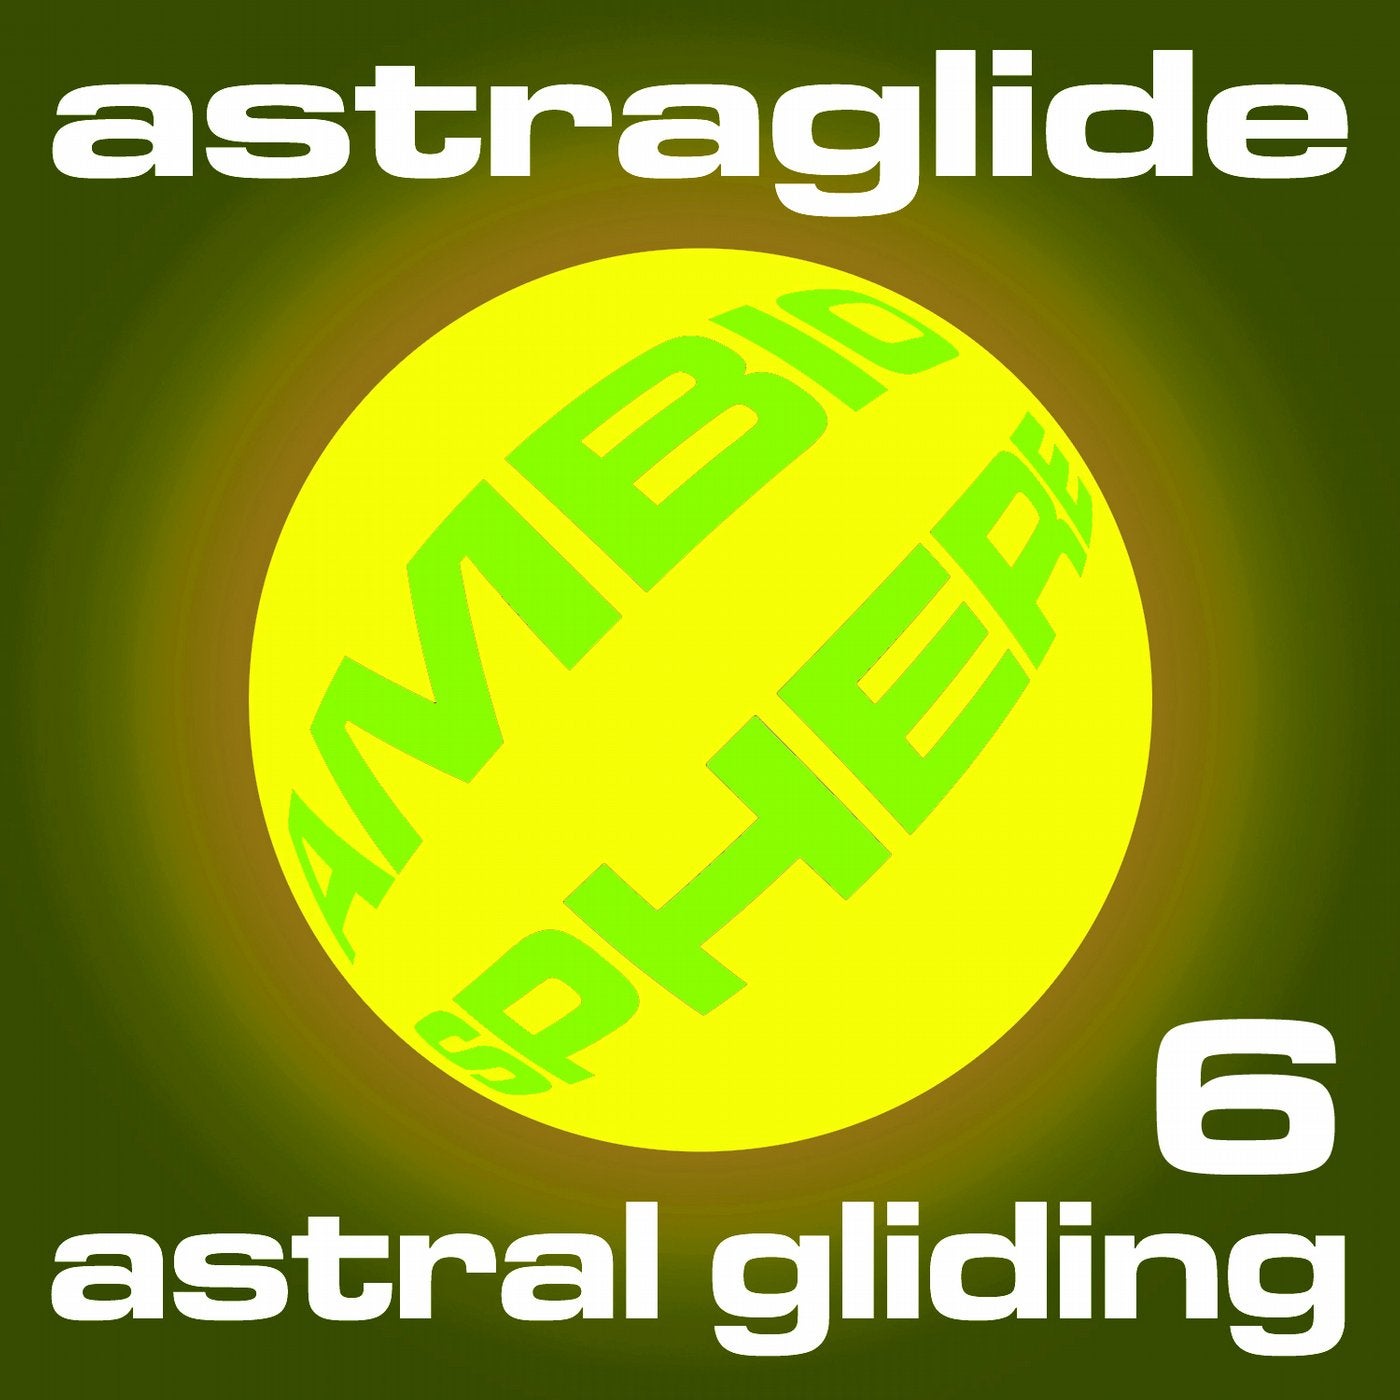 Astral Gliding 6